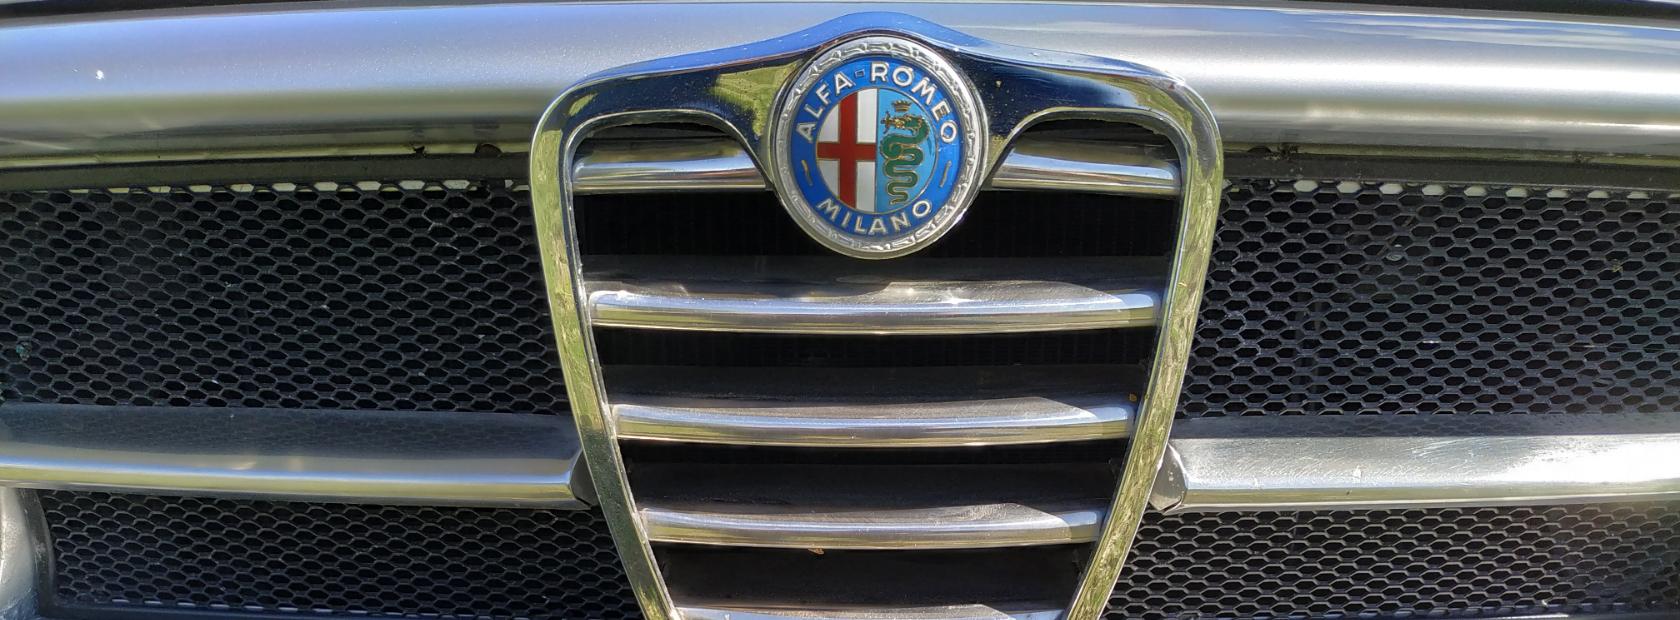 Noleggio Alfa Romeo GT Junior a Siena